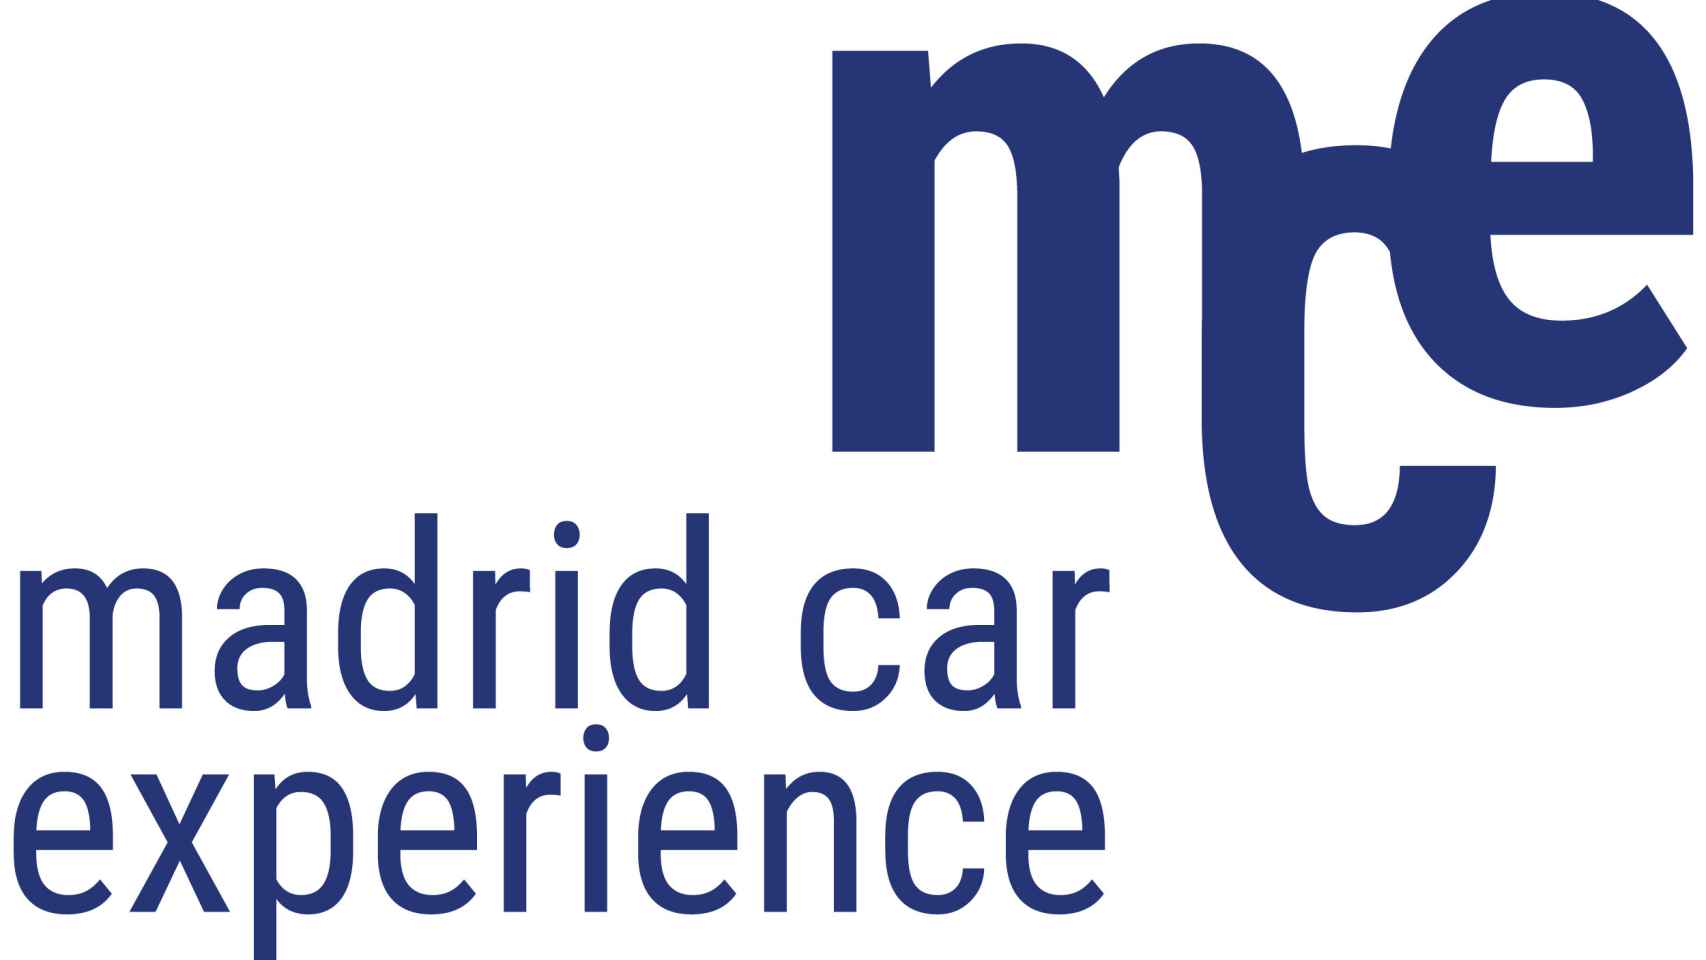 Madrid Car Experience.